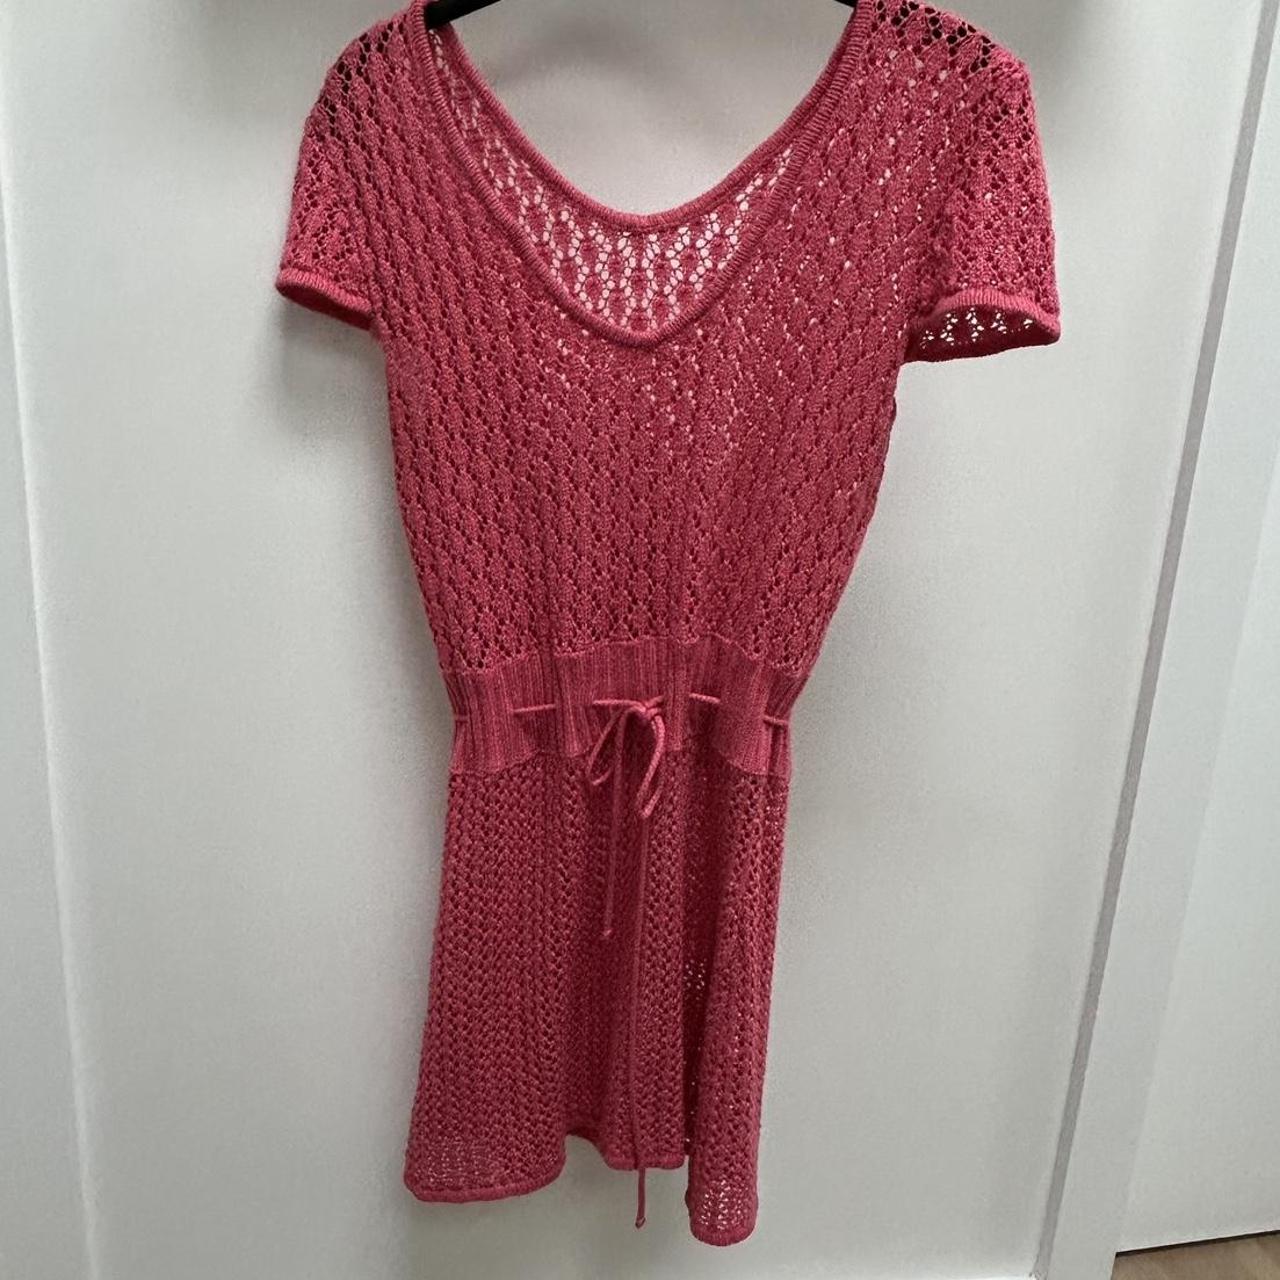 Vintage crochet dress - Depop